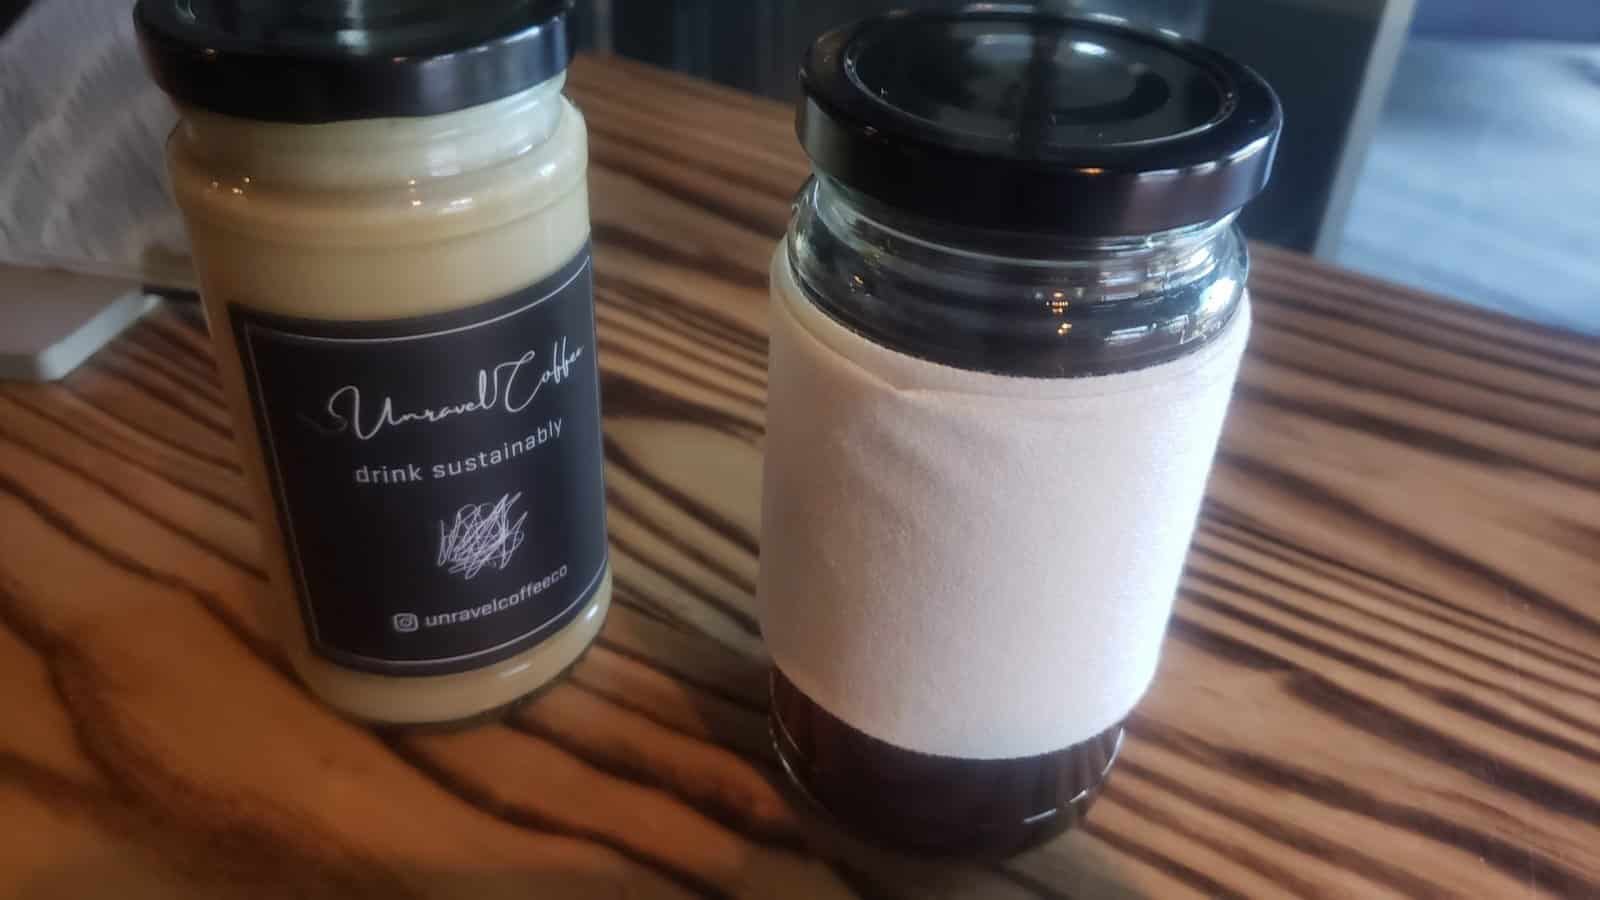 Lattes in Jars from a coffee shop in Breckenridge, Colorado.